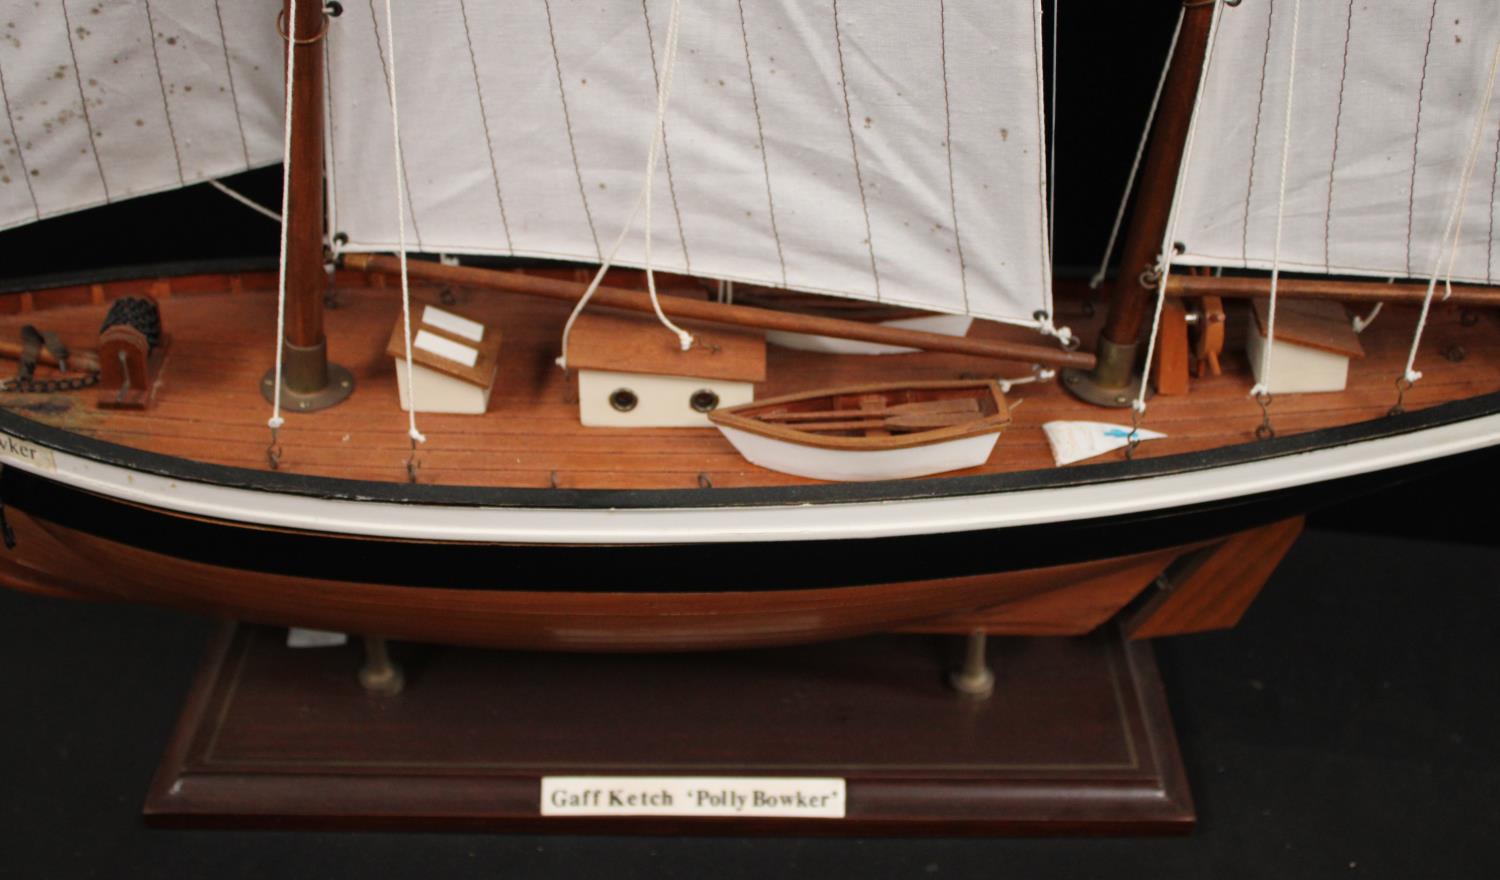 Model ship - Gaff Ketch 'Poly Bowker', 73cm wide, - Image 2 of 2